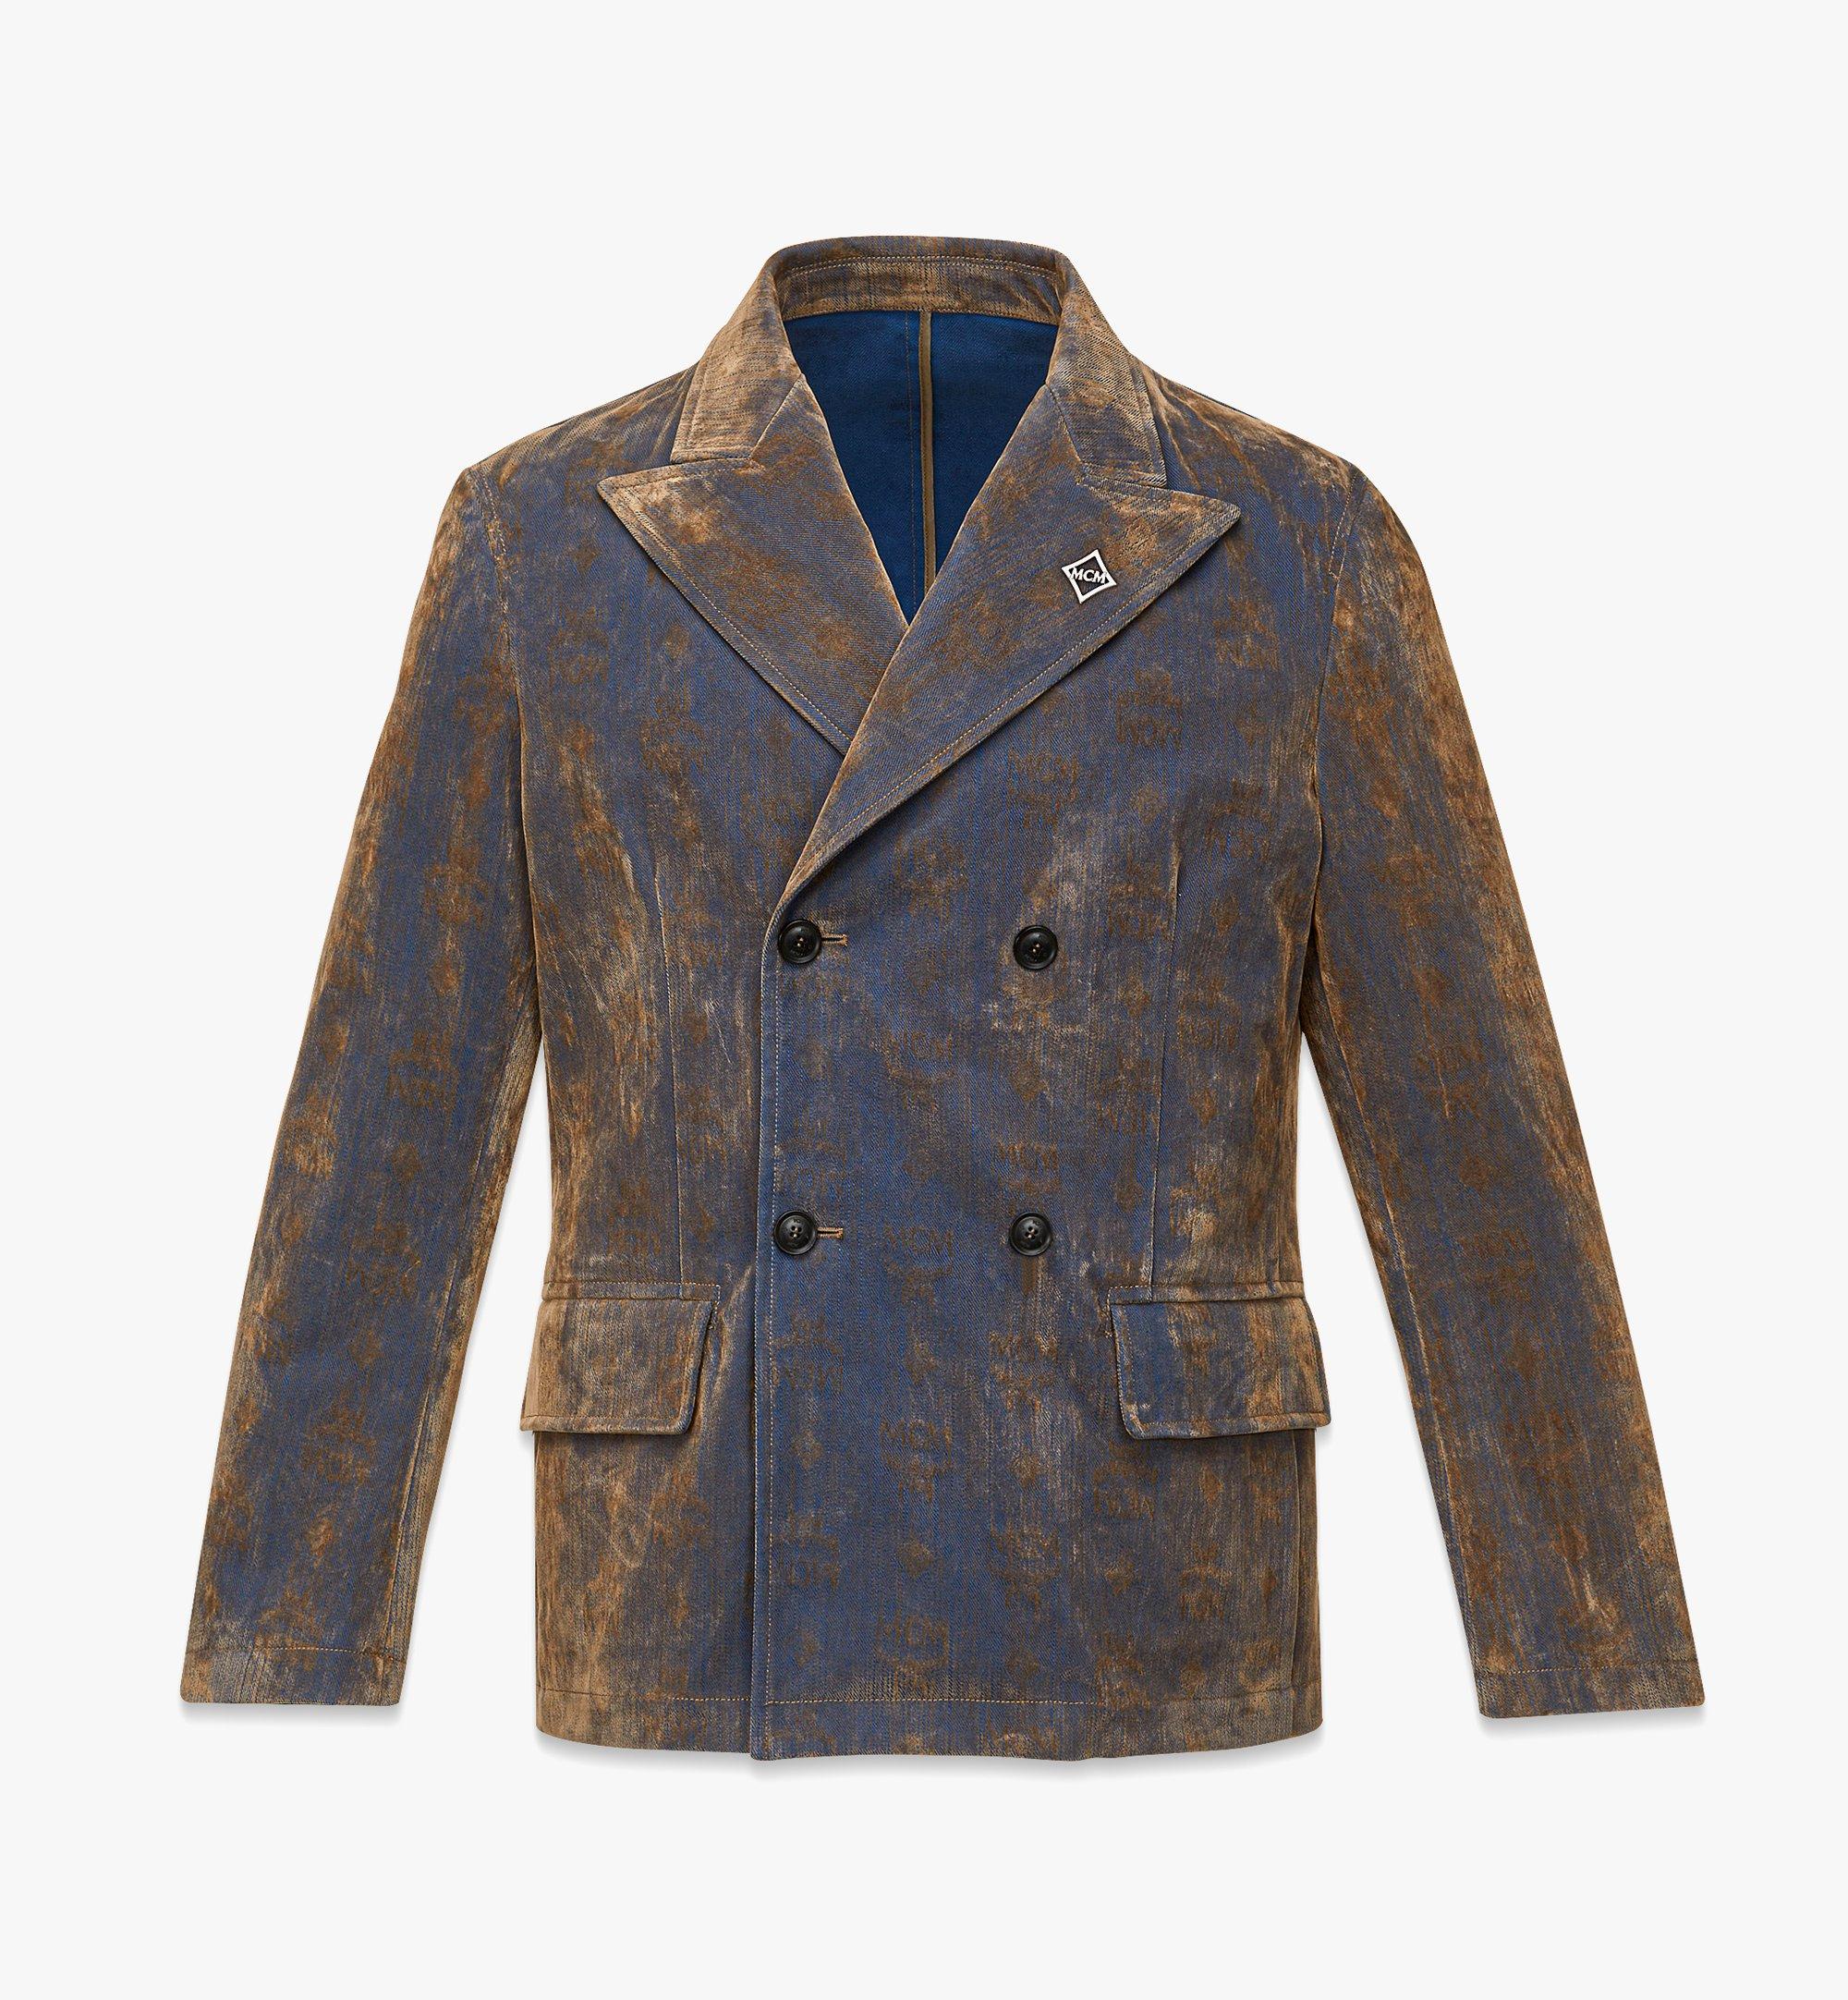 MCM Coats & Jackets for Men